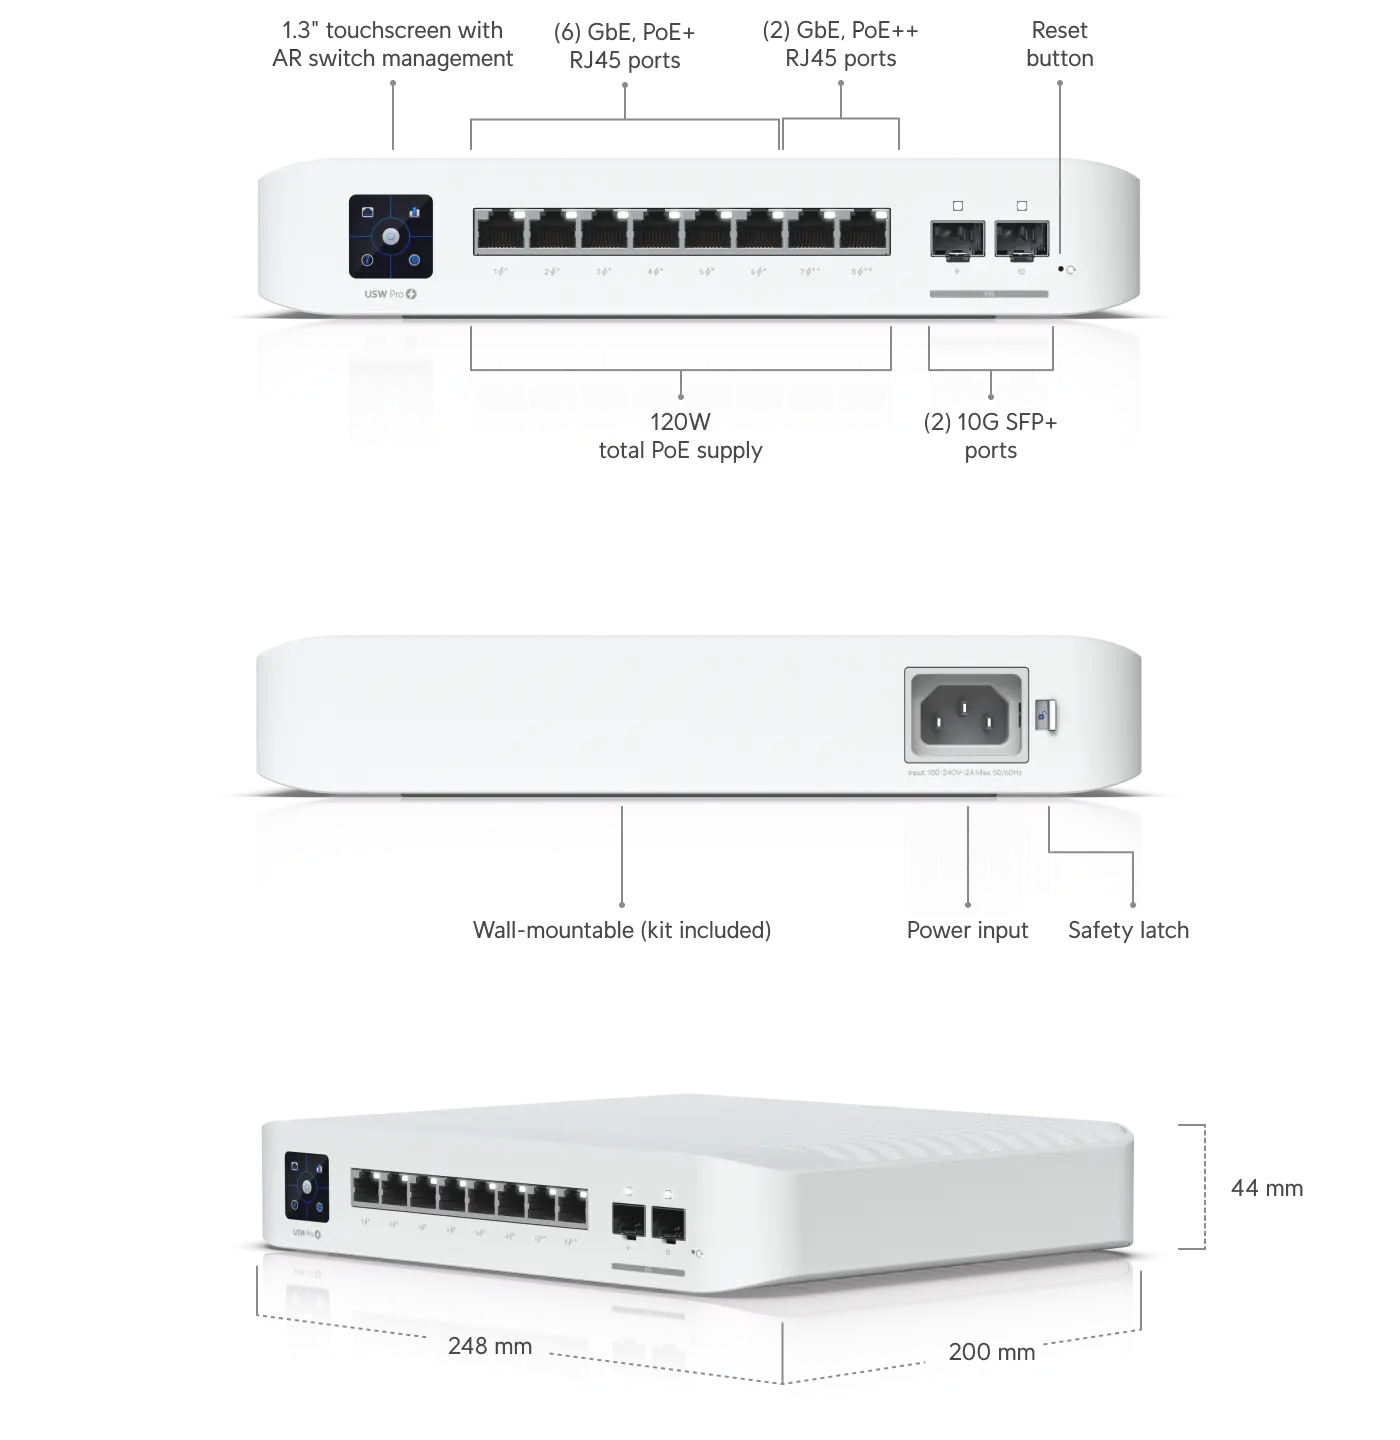 Ubiquiti Networks UniFi Pro 8 8-Port Gigabit PoE++ Compliant Managed Network Switch